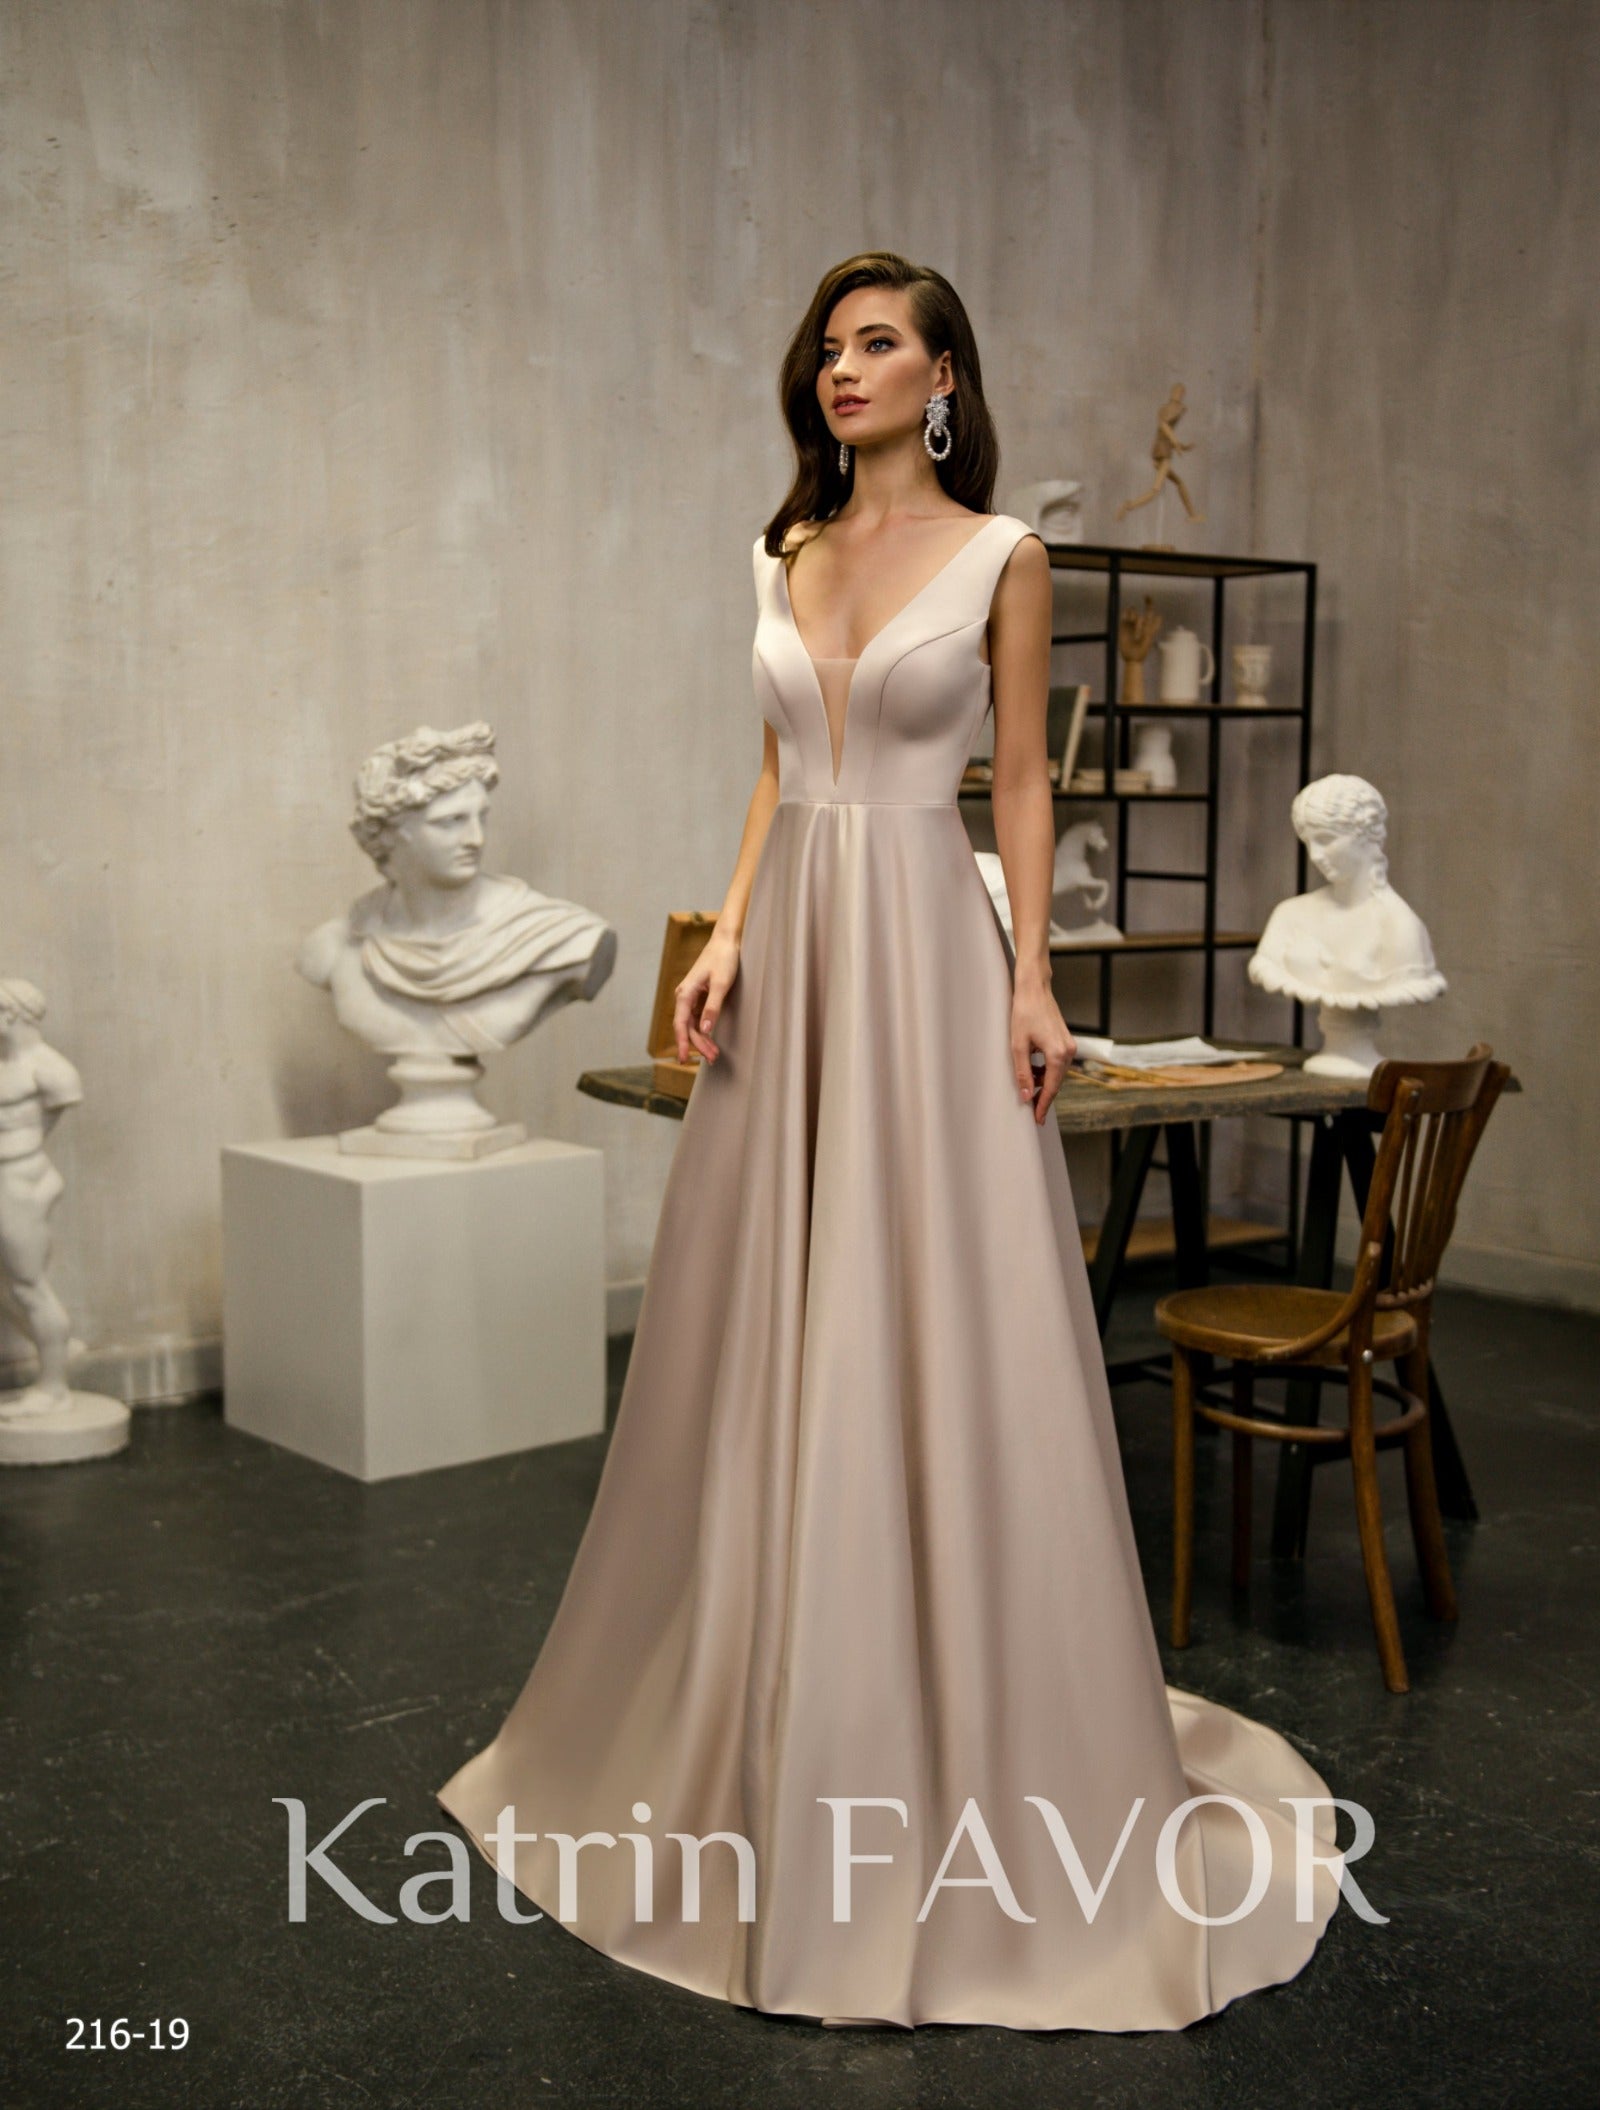 KatrinFAVORboutique-Blush two piece wedding dress